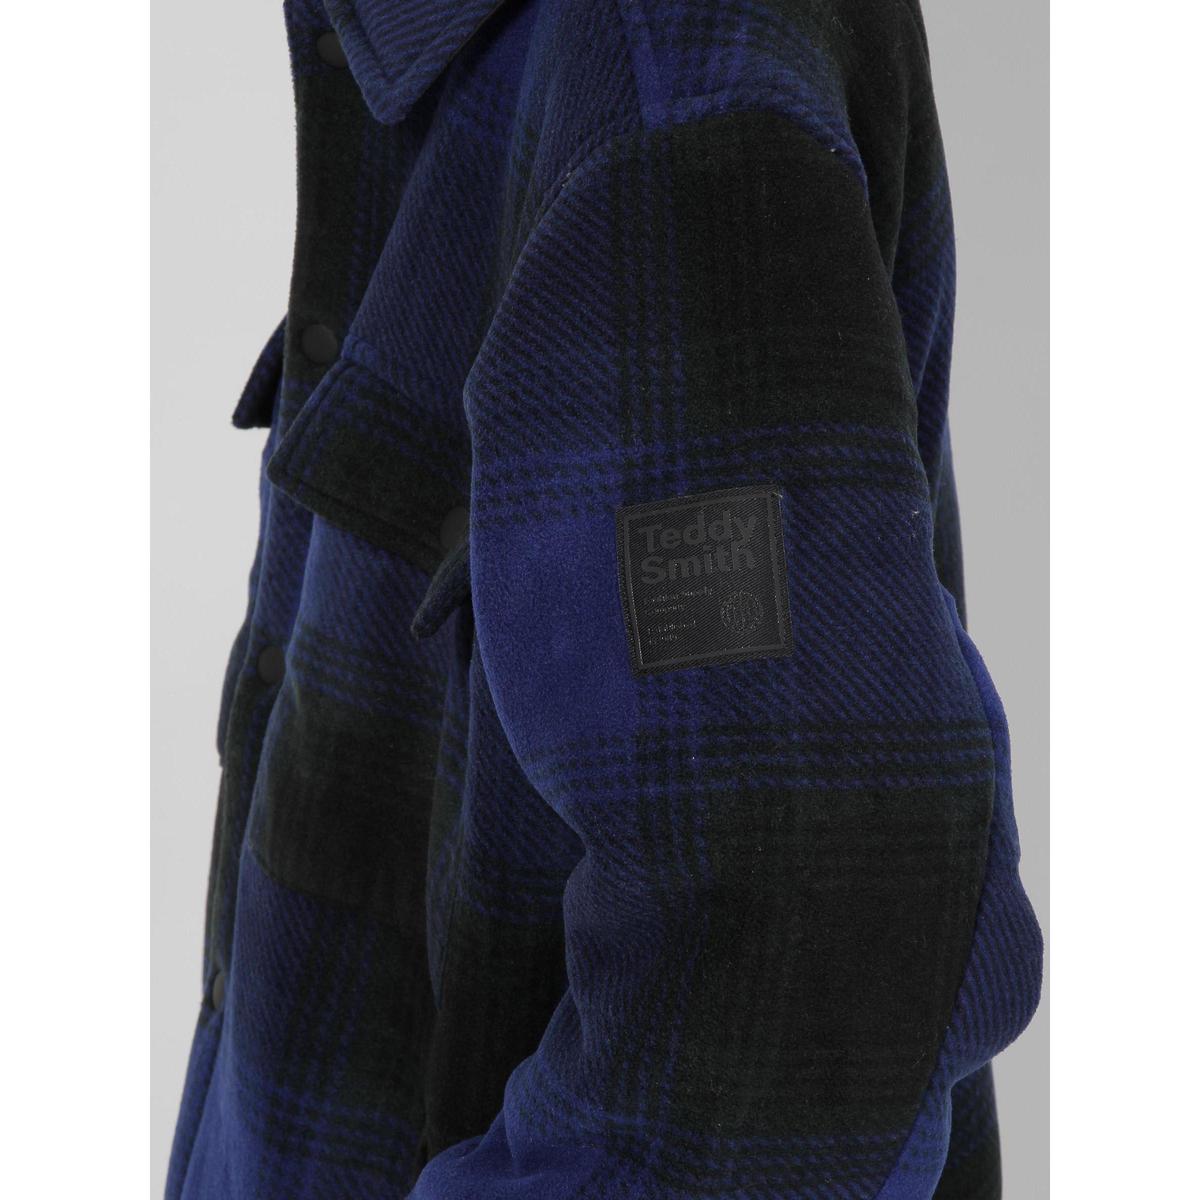 Teddy Smith Bleu Ron blue sherpa shirt jr oYX06yRs